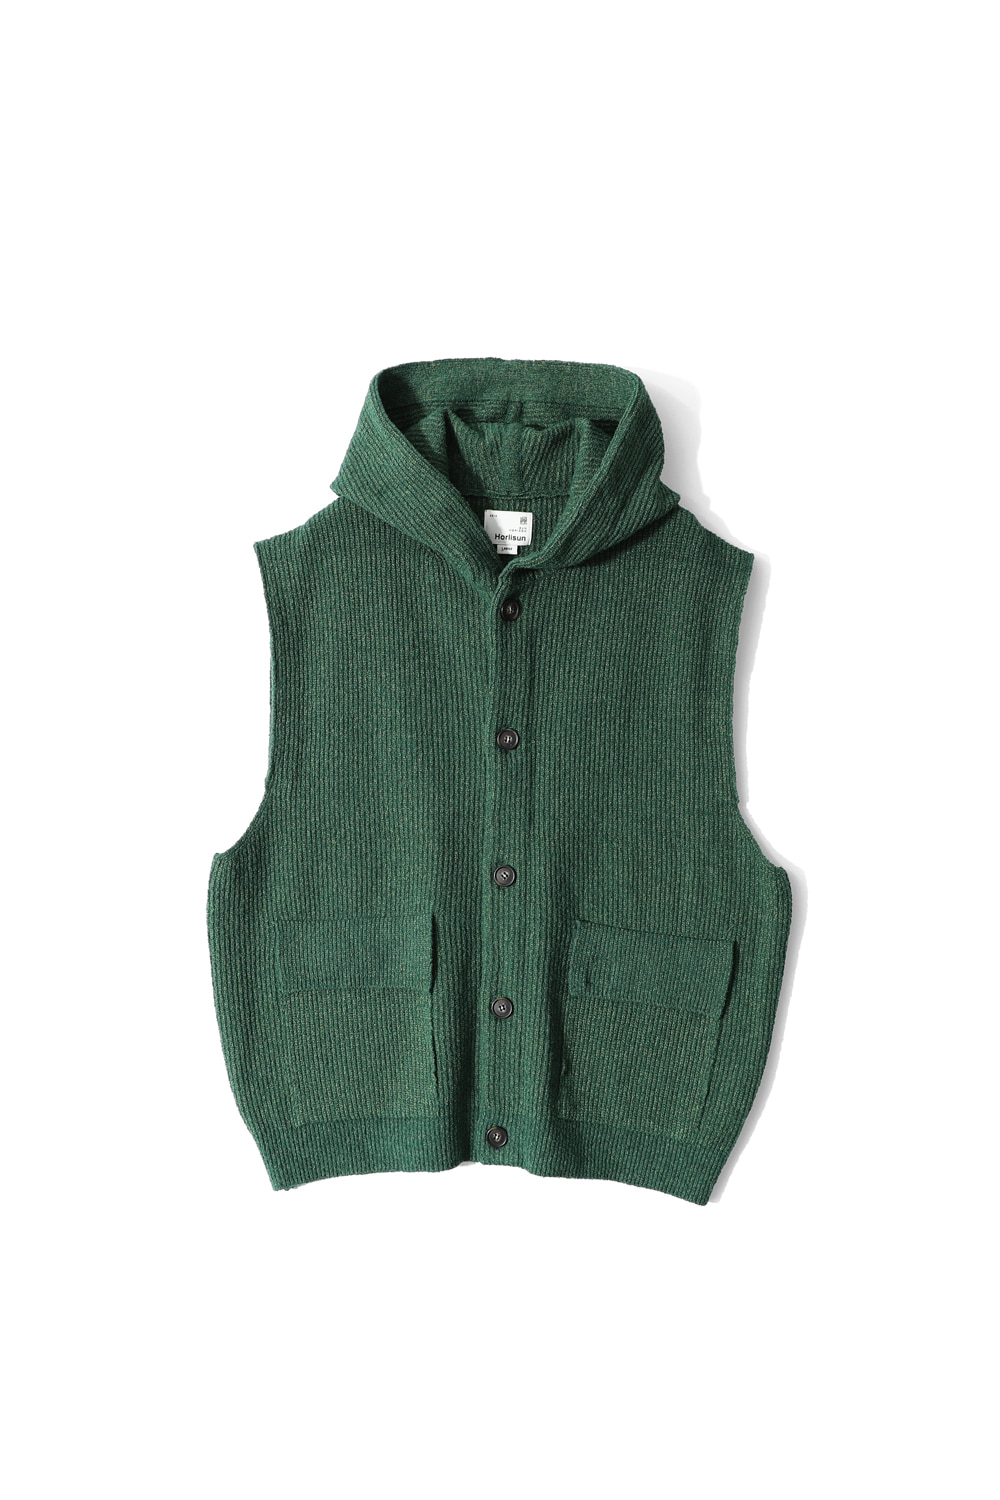 Acorn Hoodie Vest Cardigan Cotton Knit Smart Green